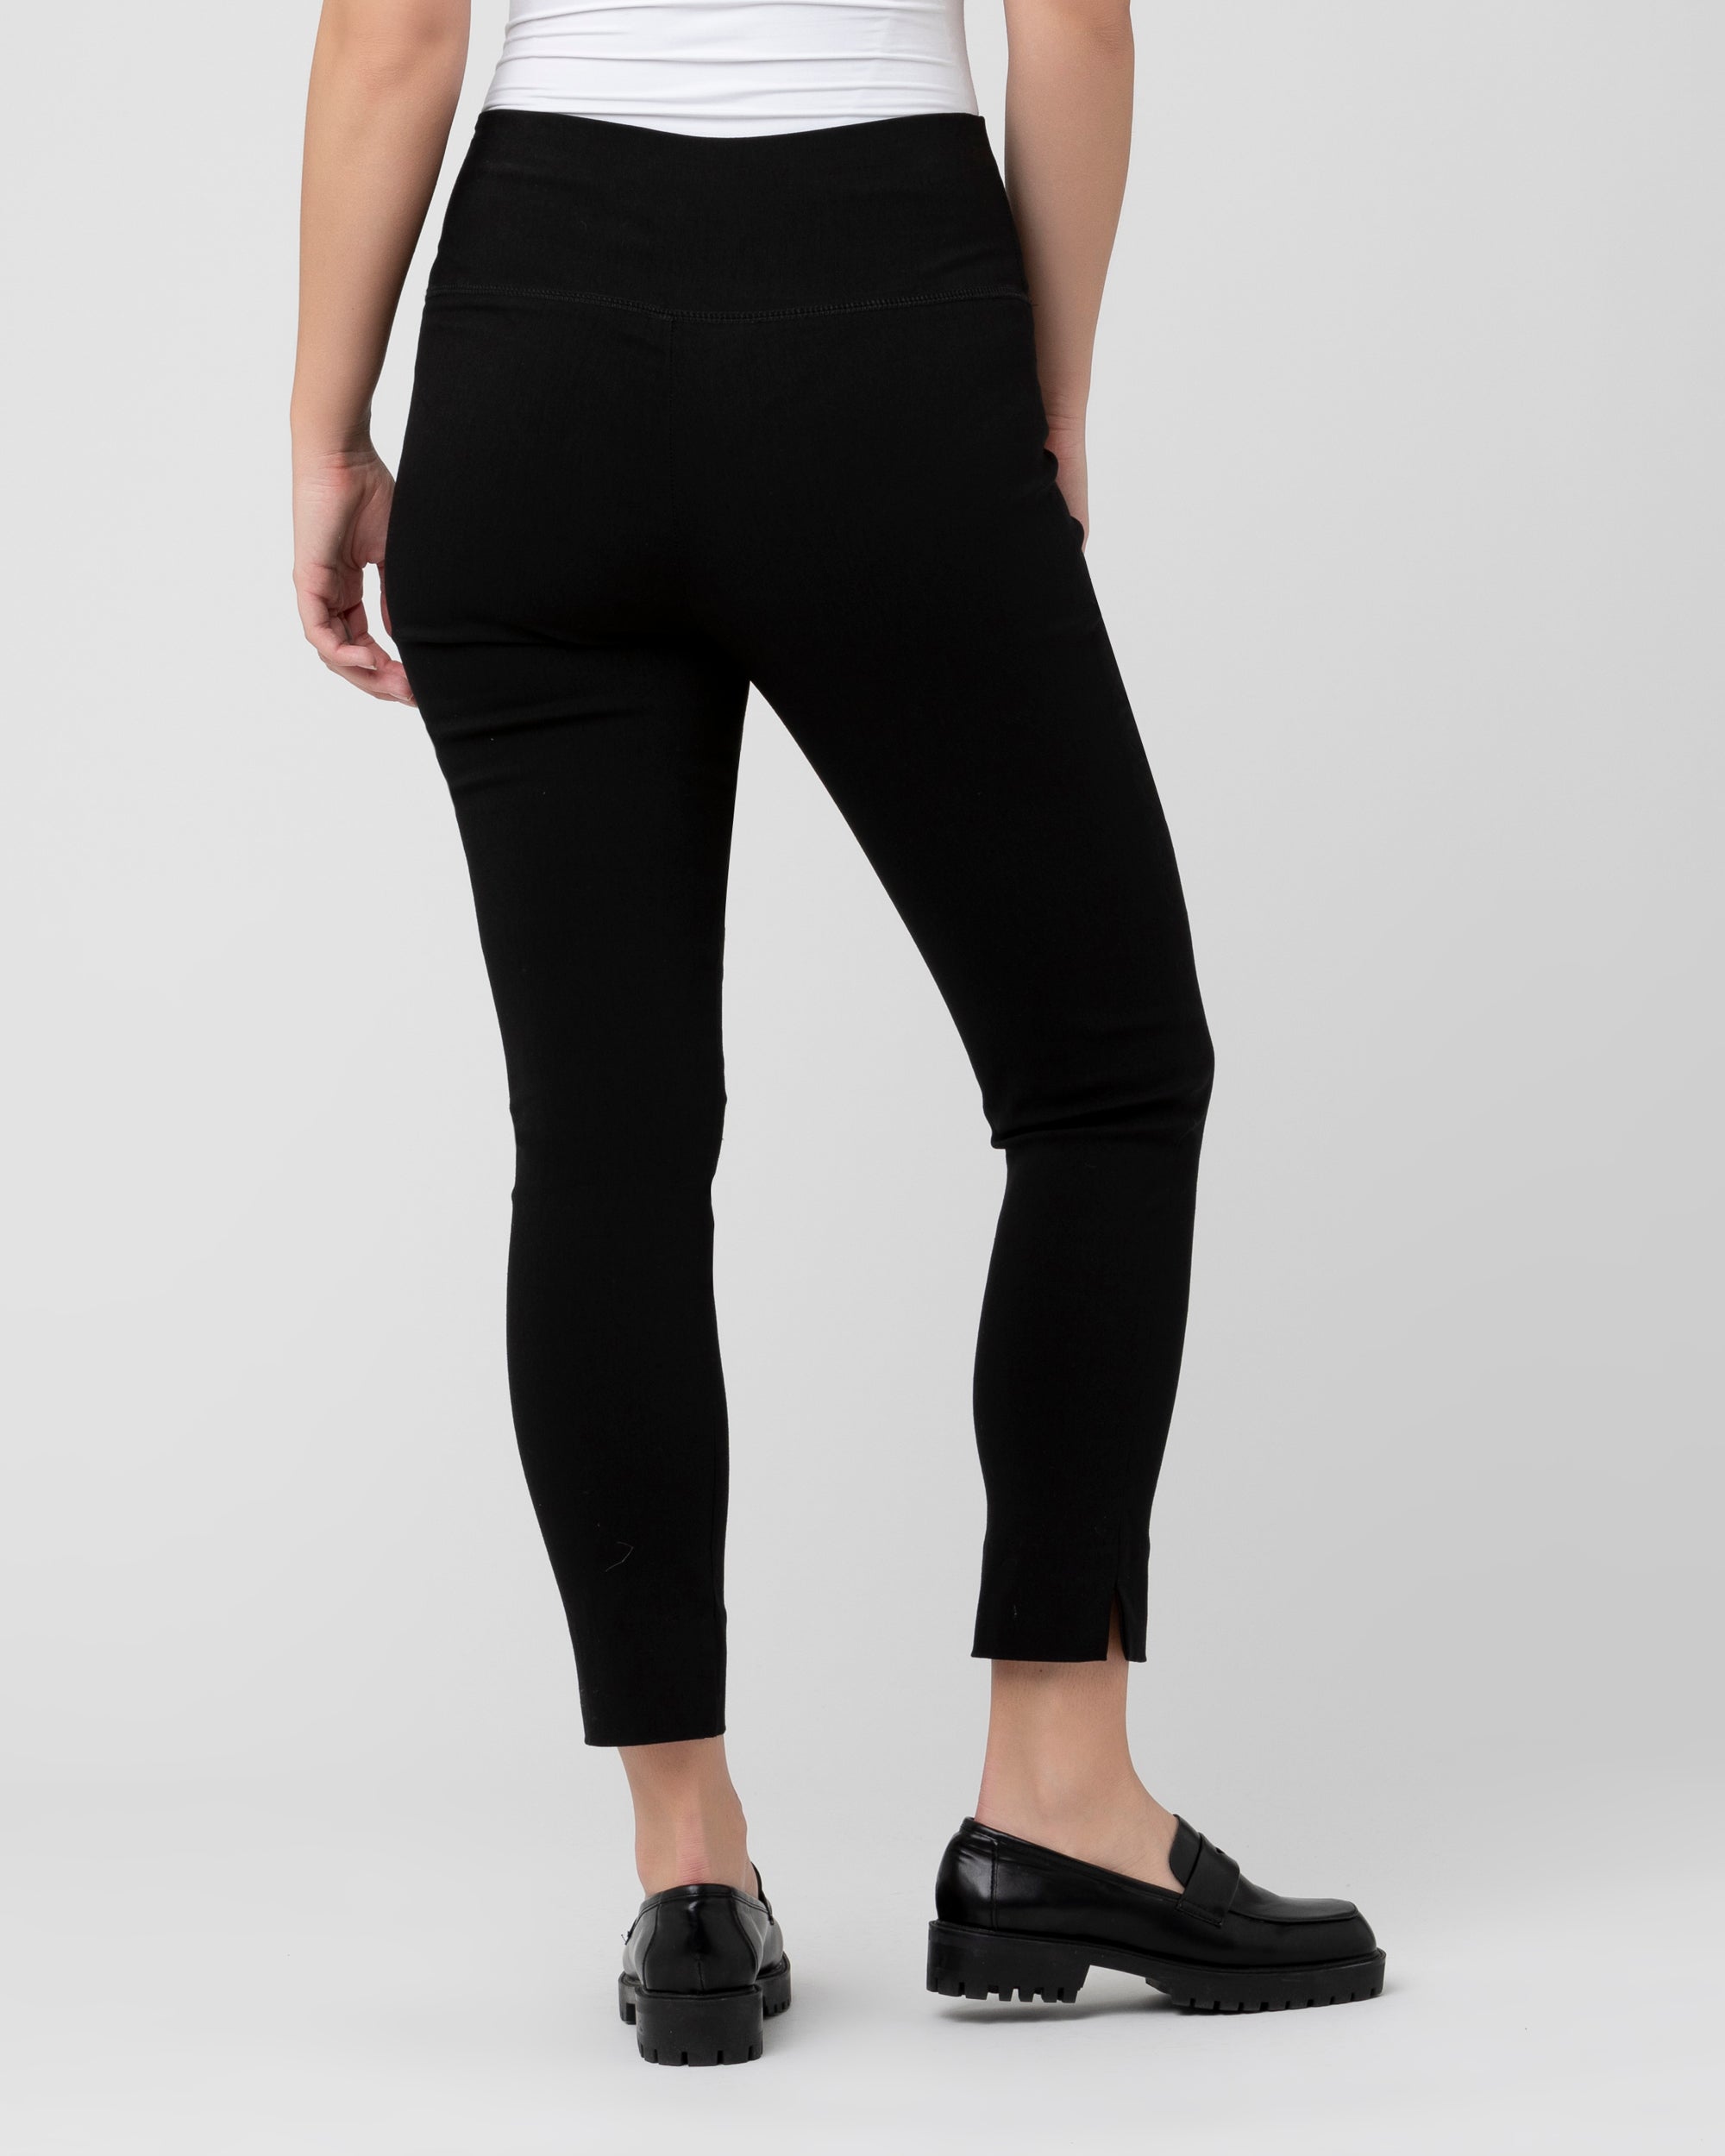 Women's Raiski Sports capri pants, size 48 (Black)